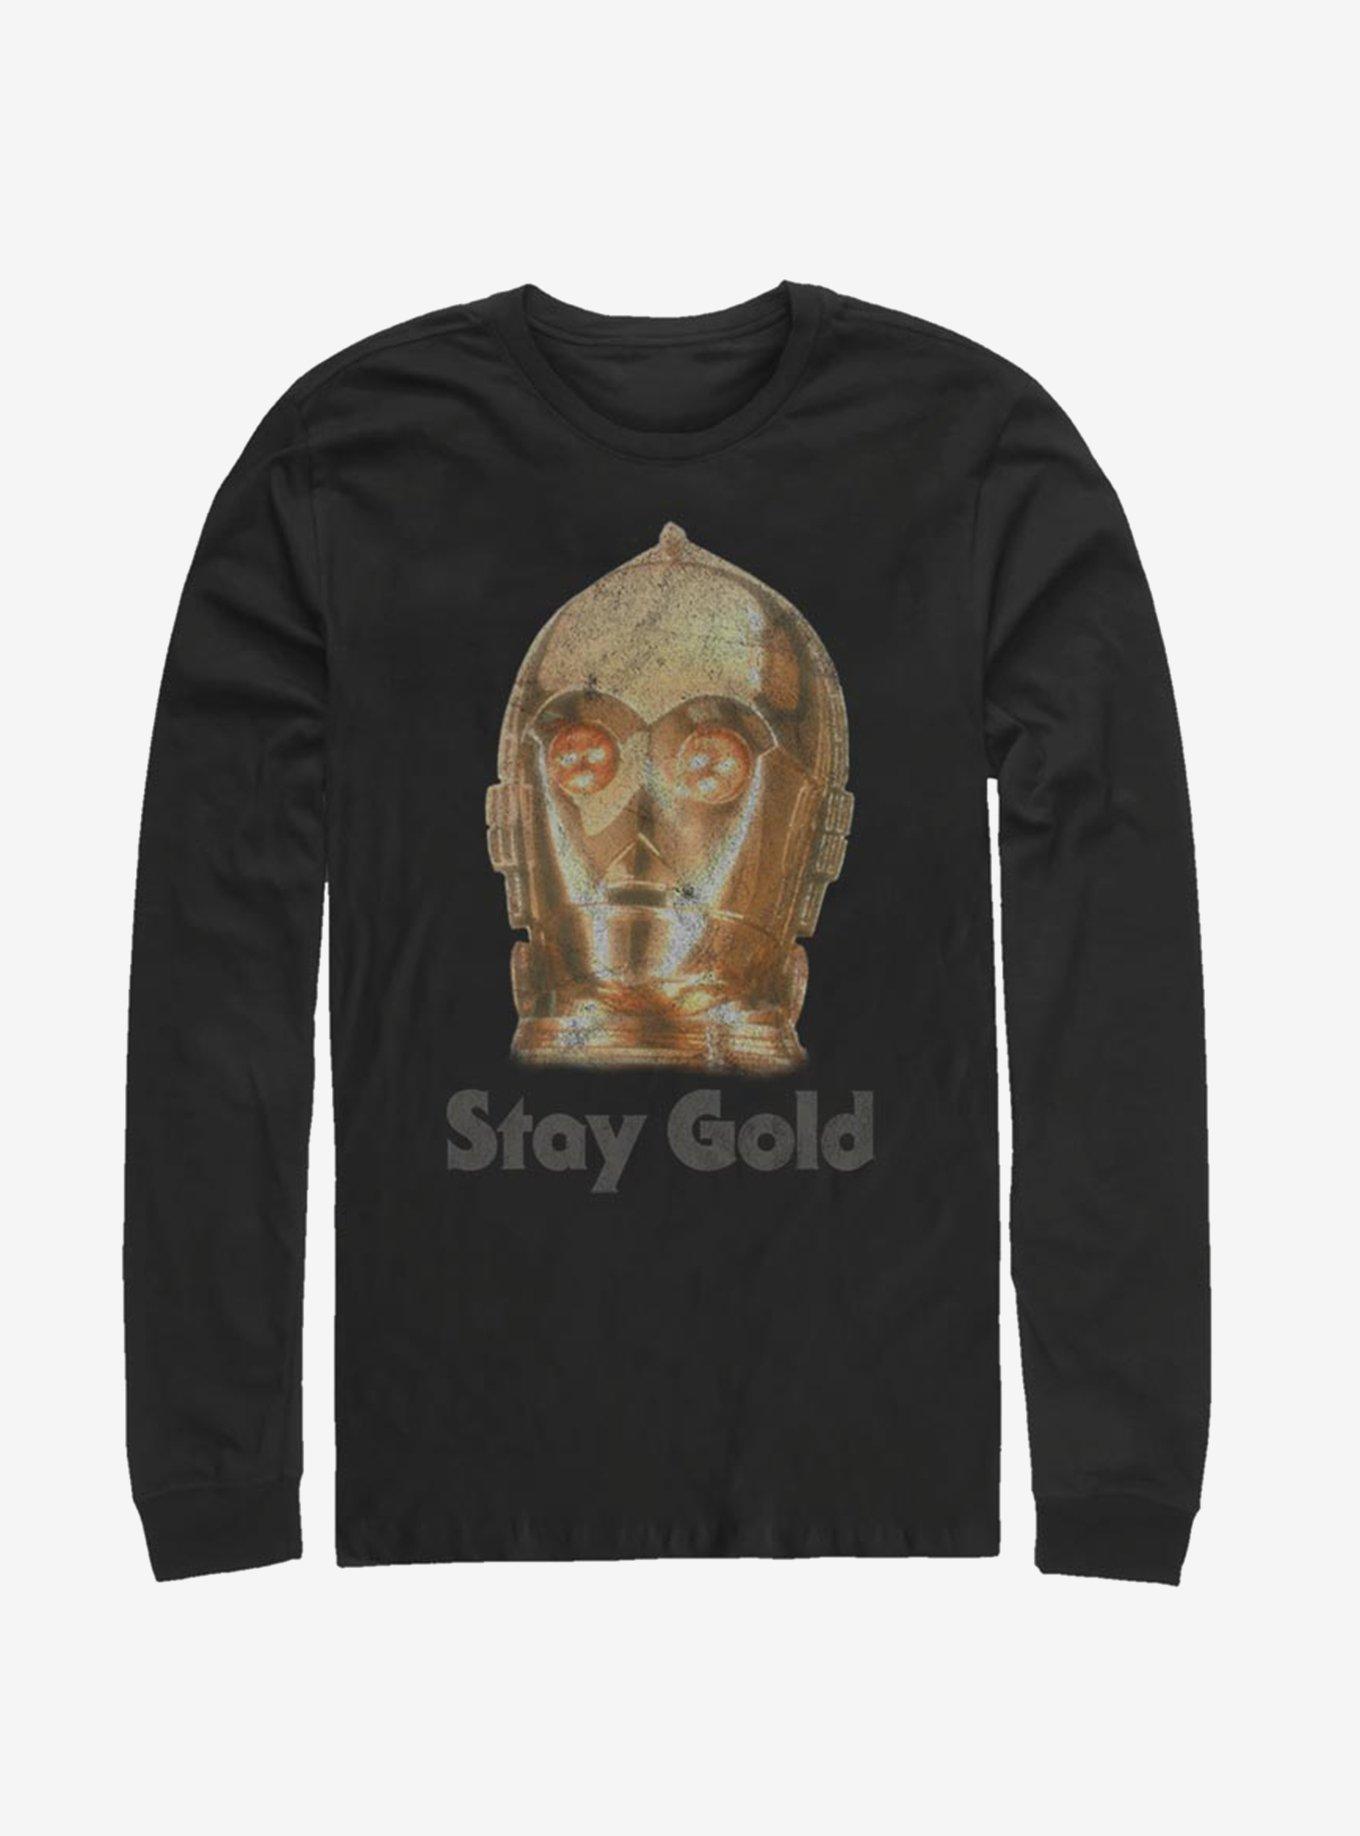 Star Wars Episode IX The Rise Of Skywalker Stay Gold Long-Sleeve T-Shirt